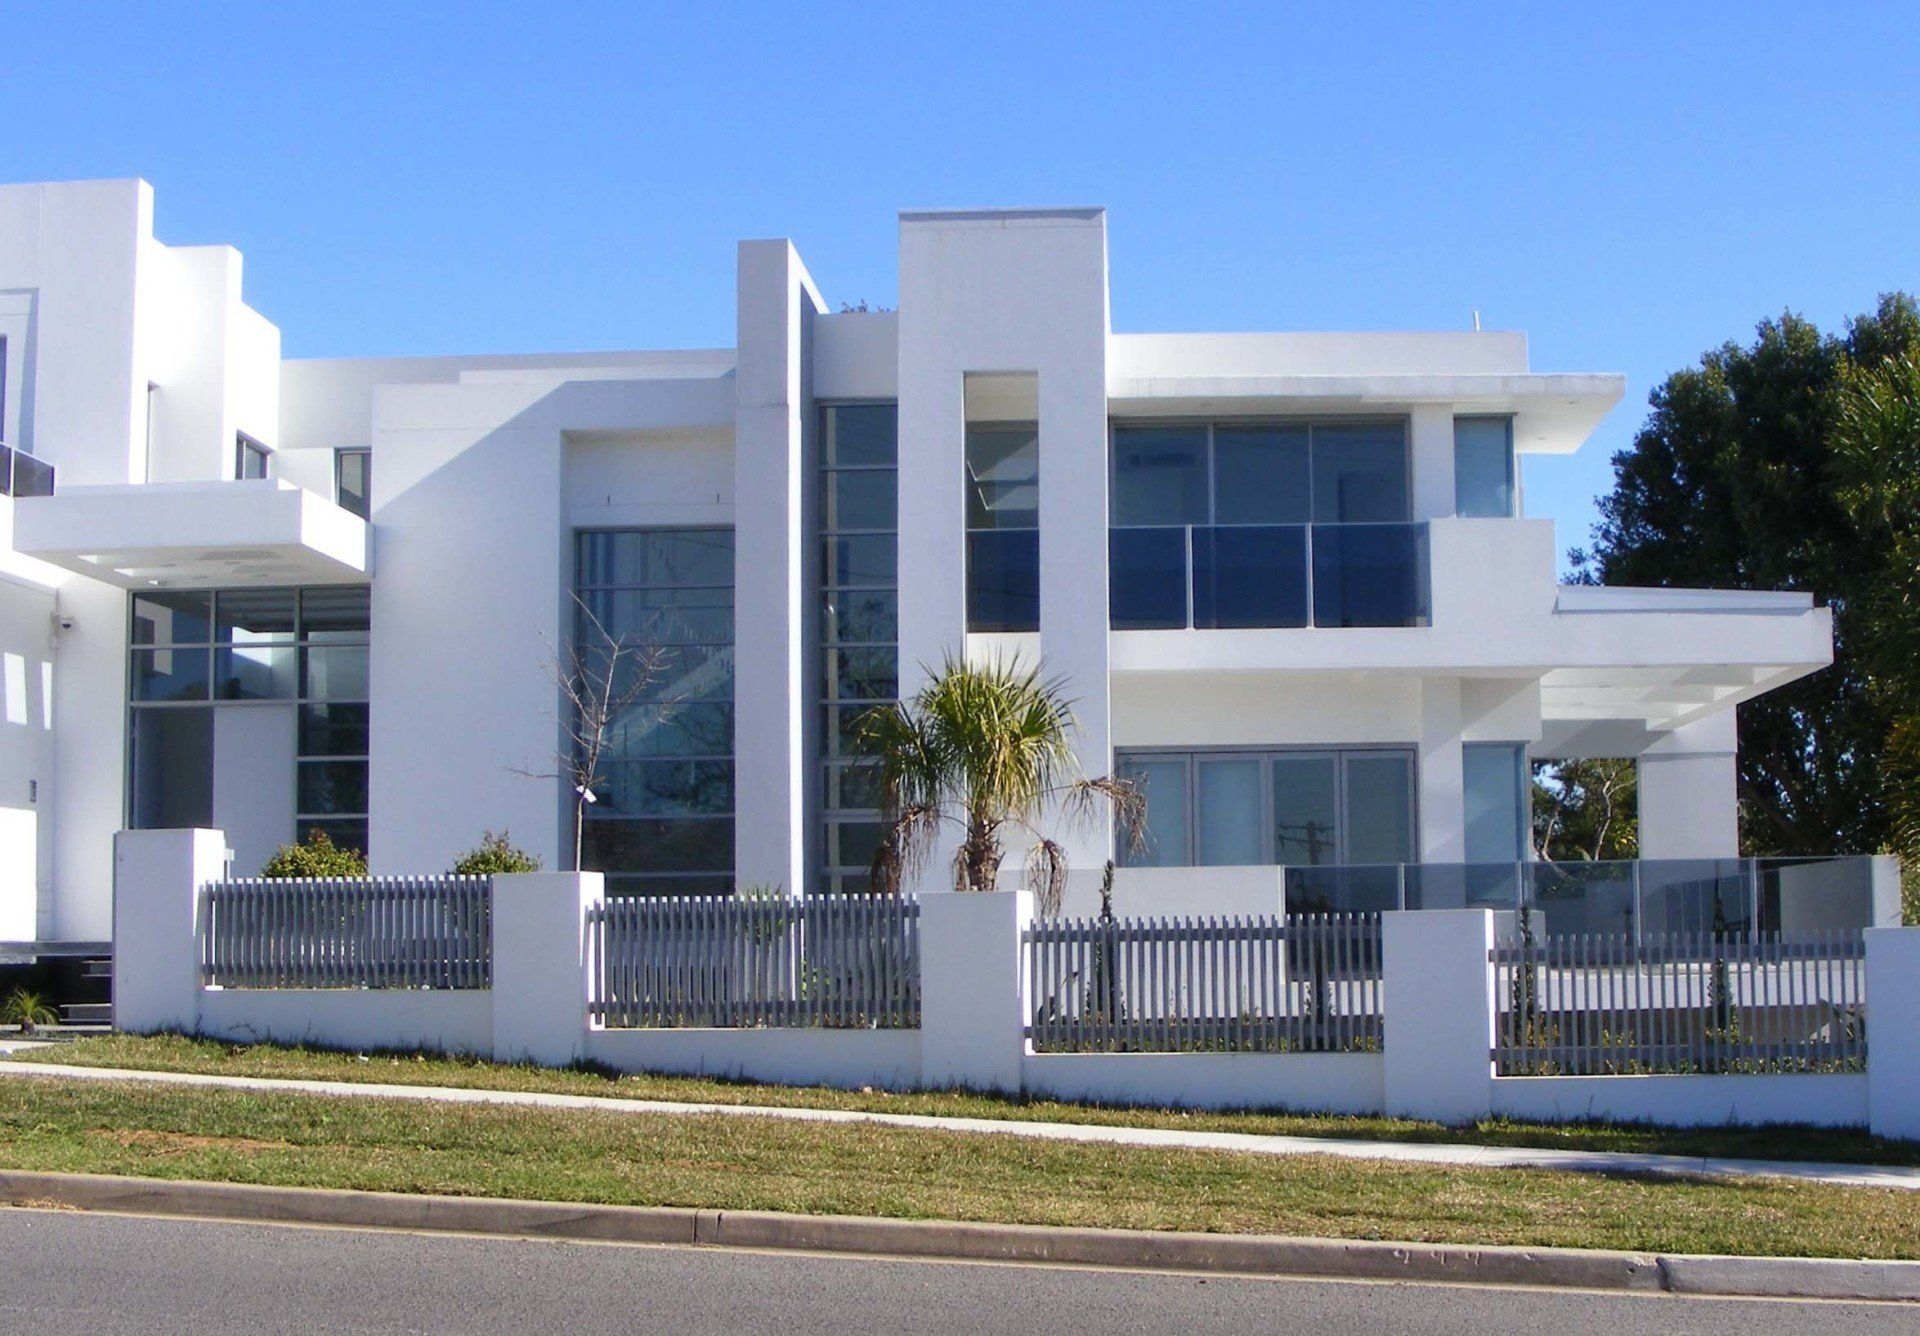 Award winning new home designs Sydney